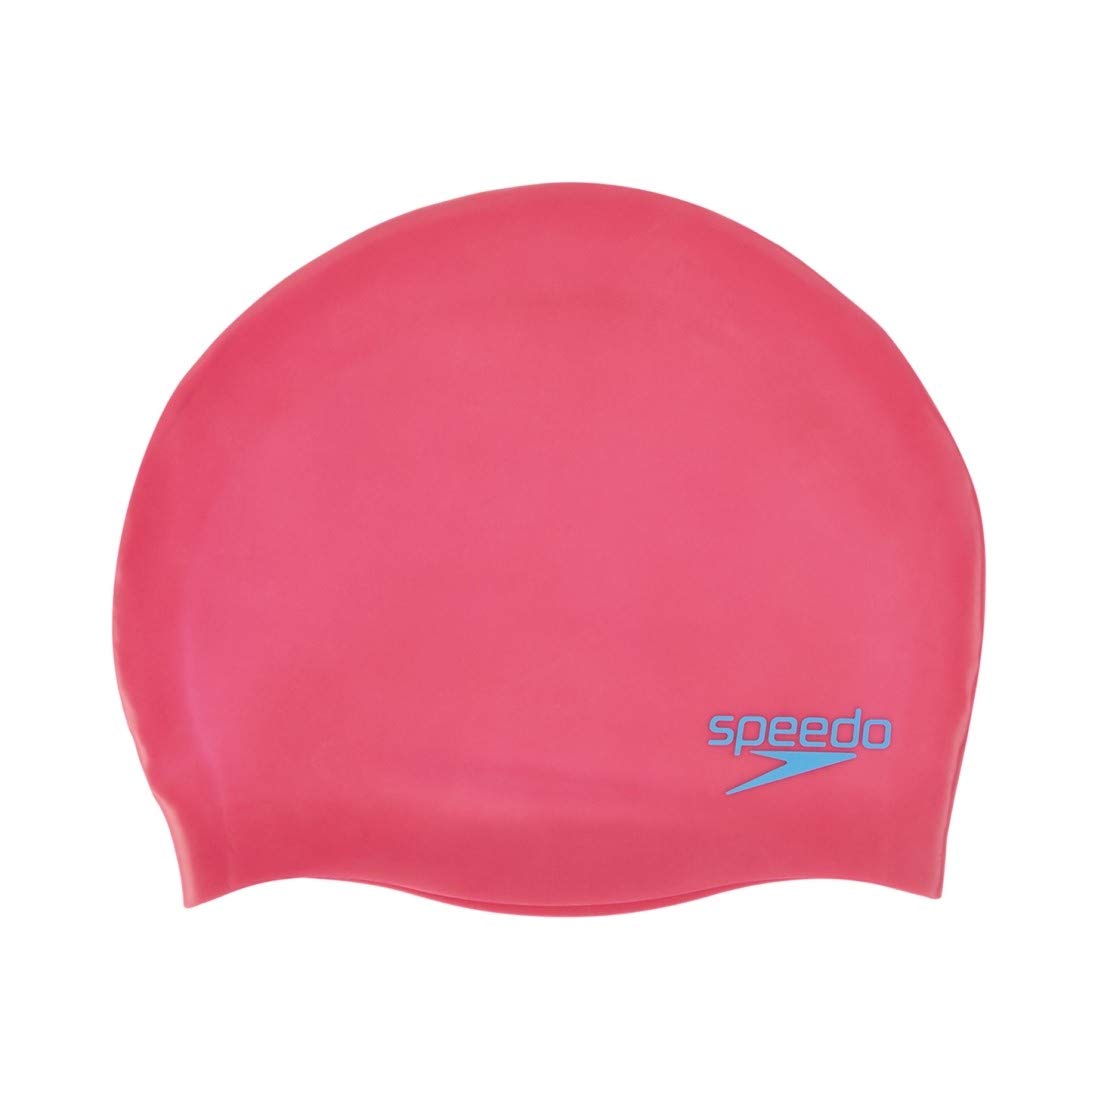 Speedo Junior Plain Molded Silicone Cap - Best Price online Prokicksports.com